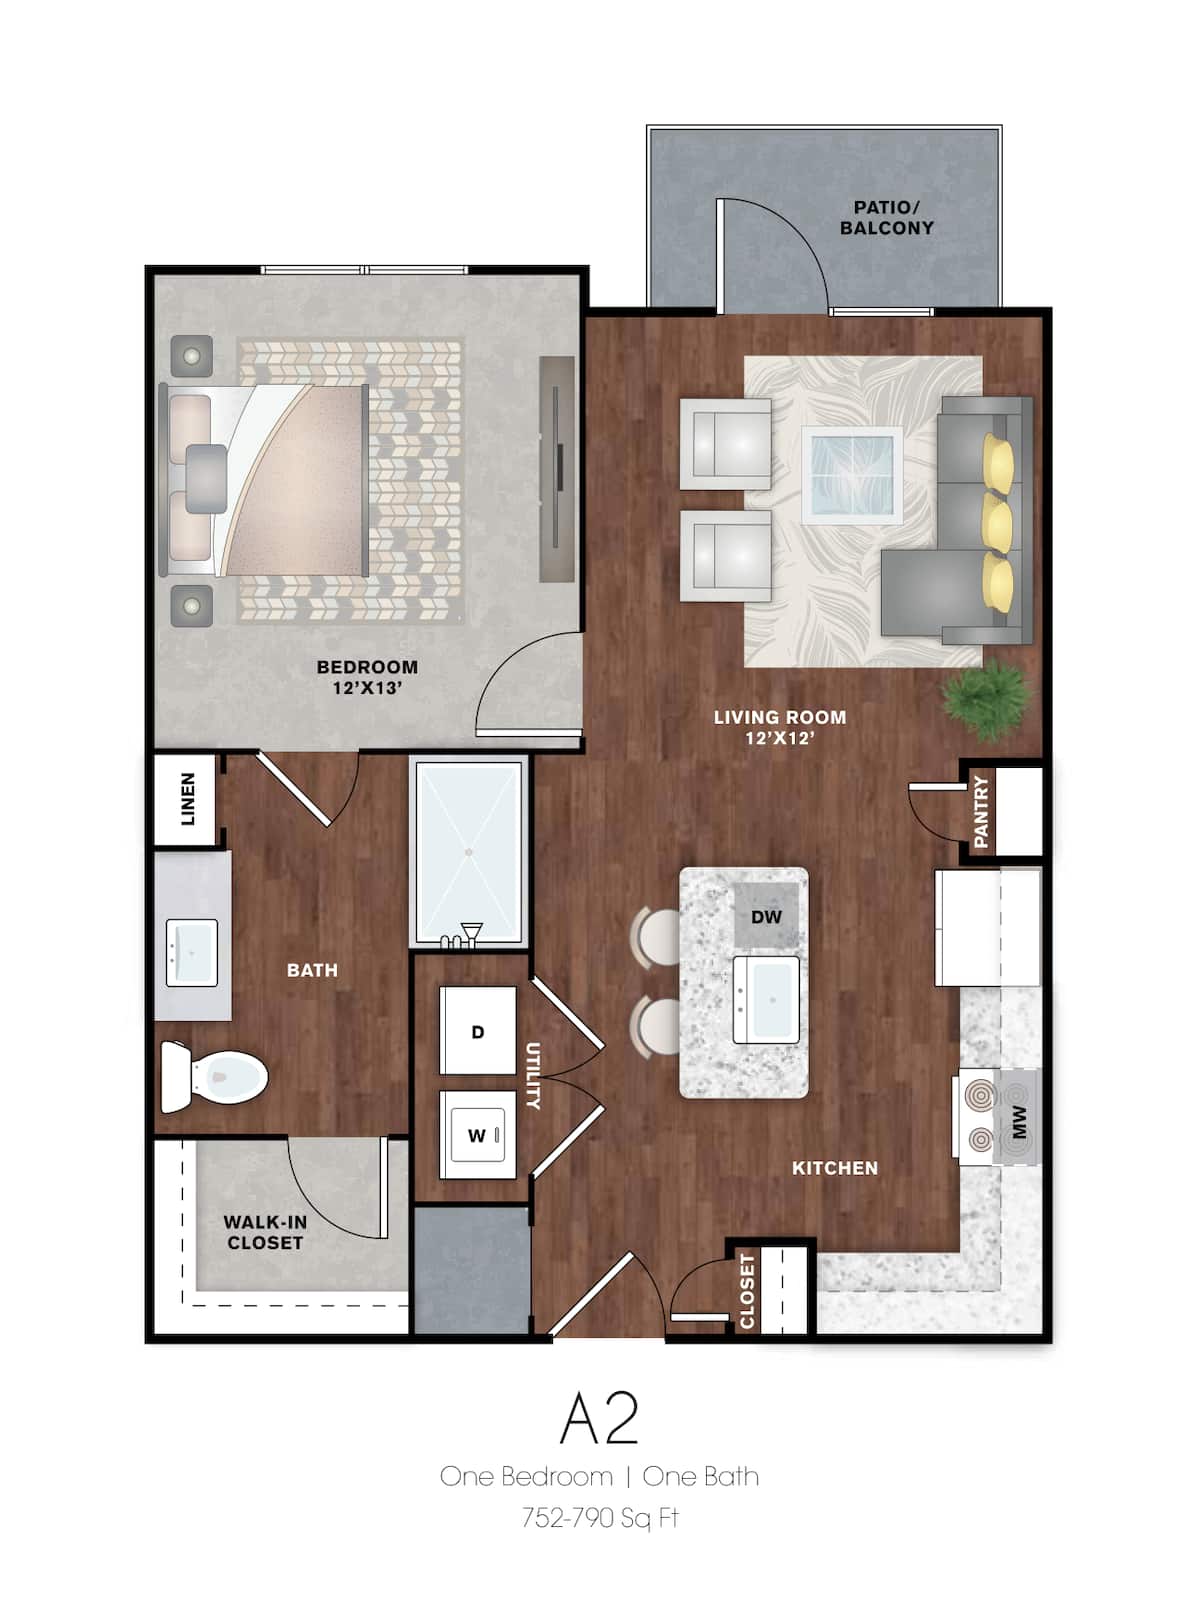 Floorplan diagram for A12, showing 1 bedroom